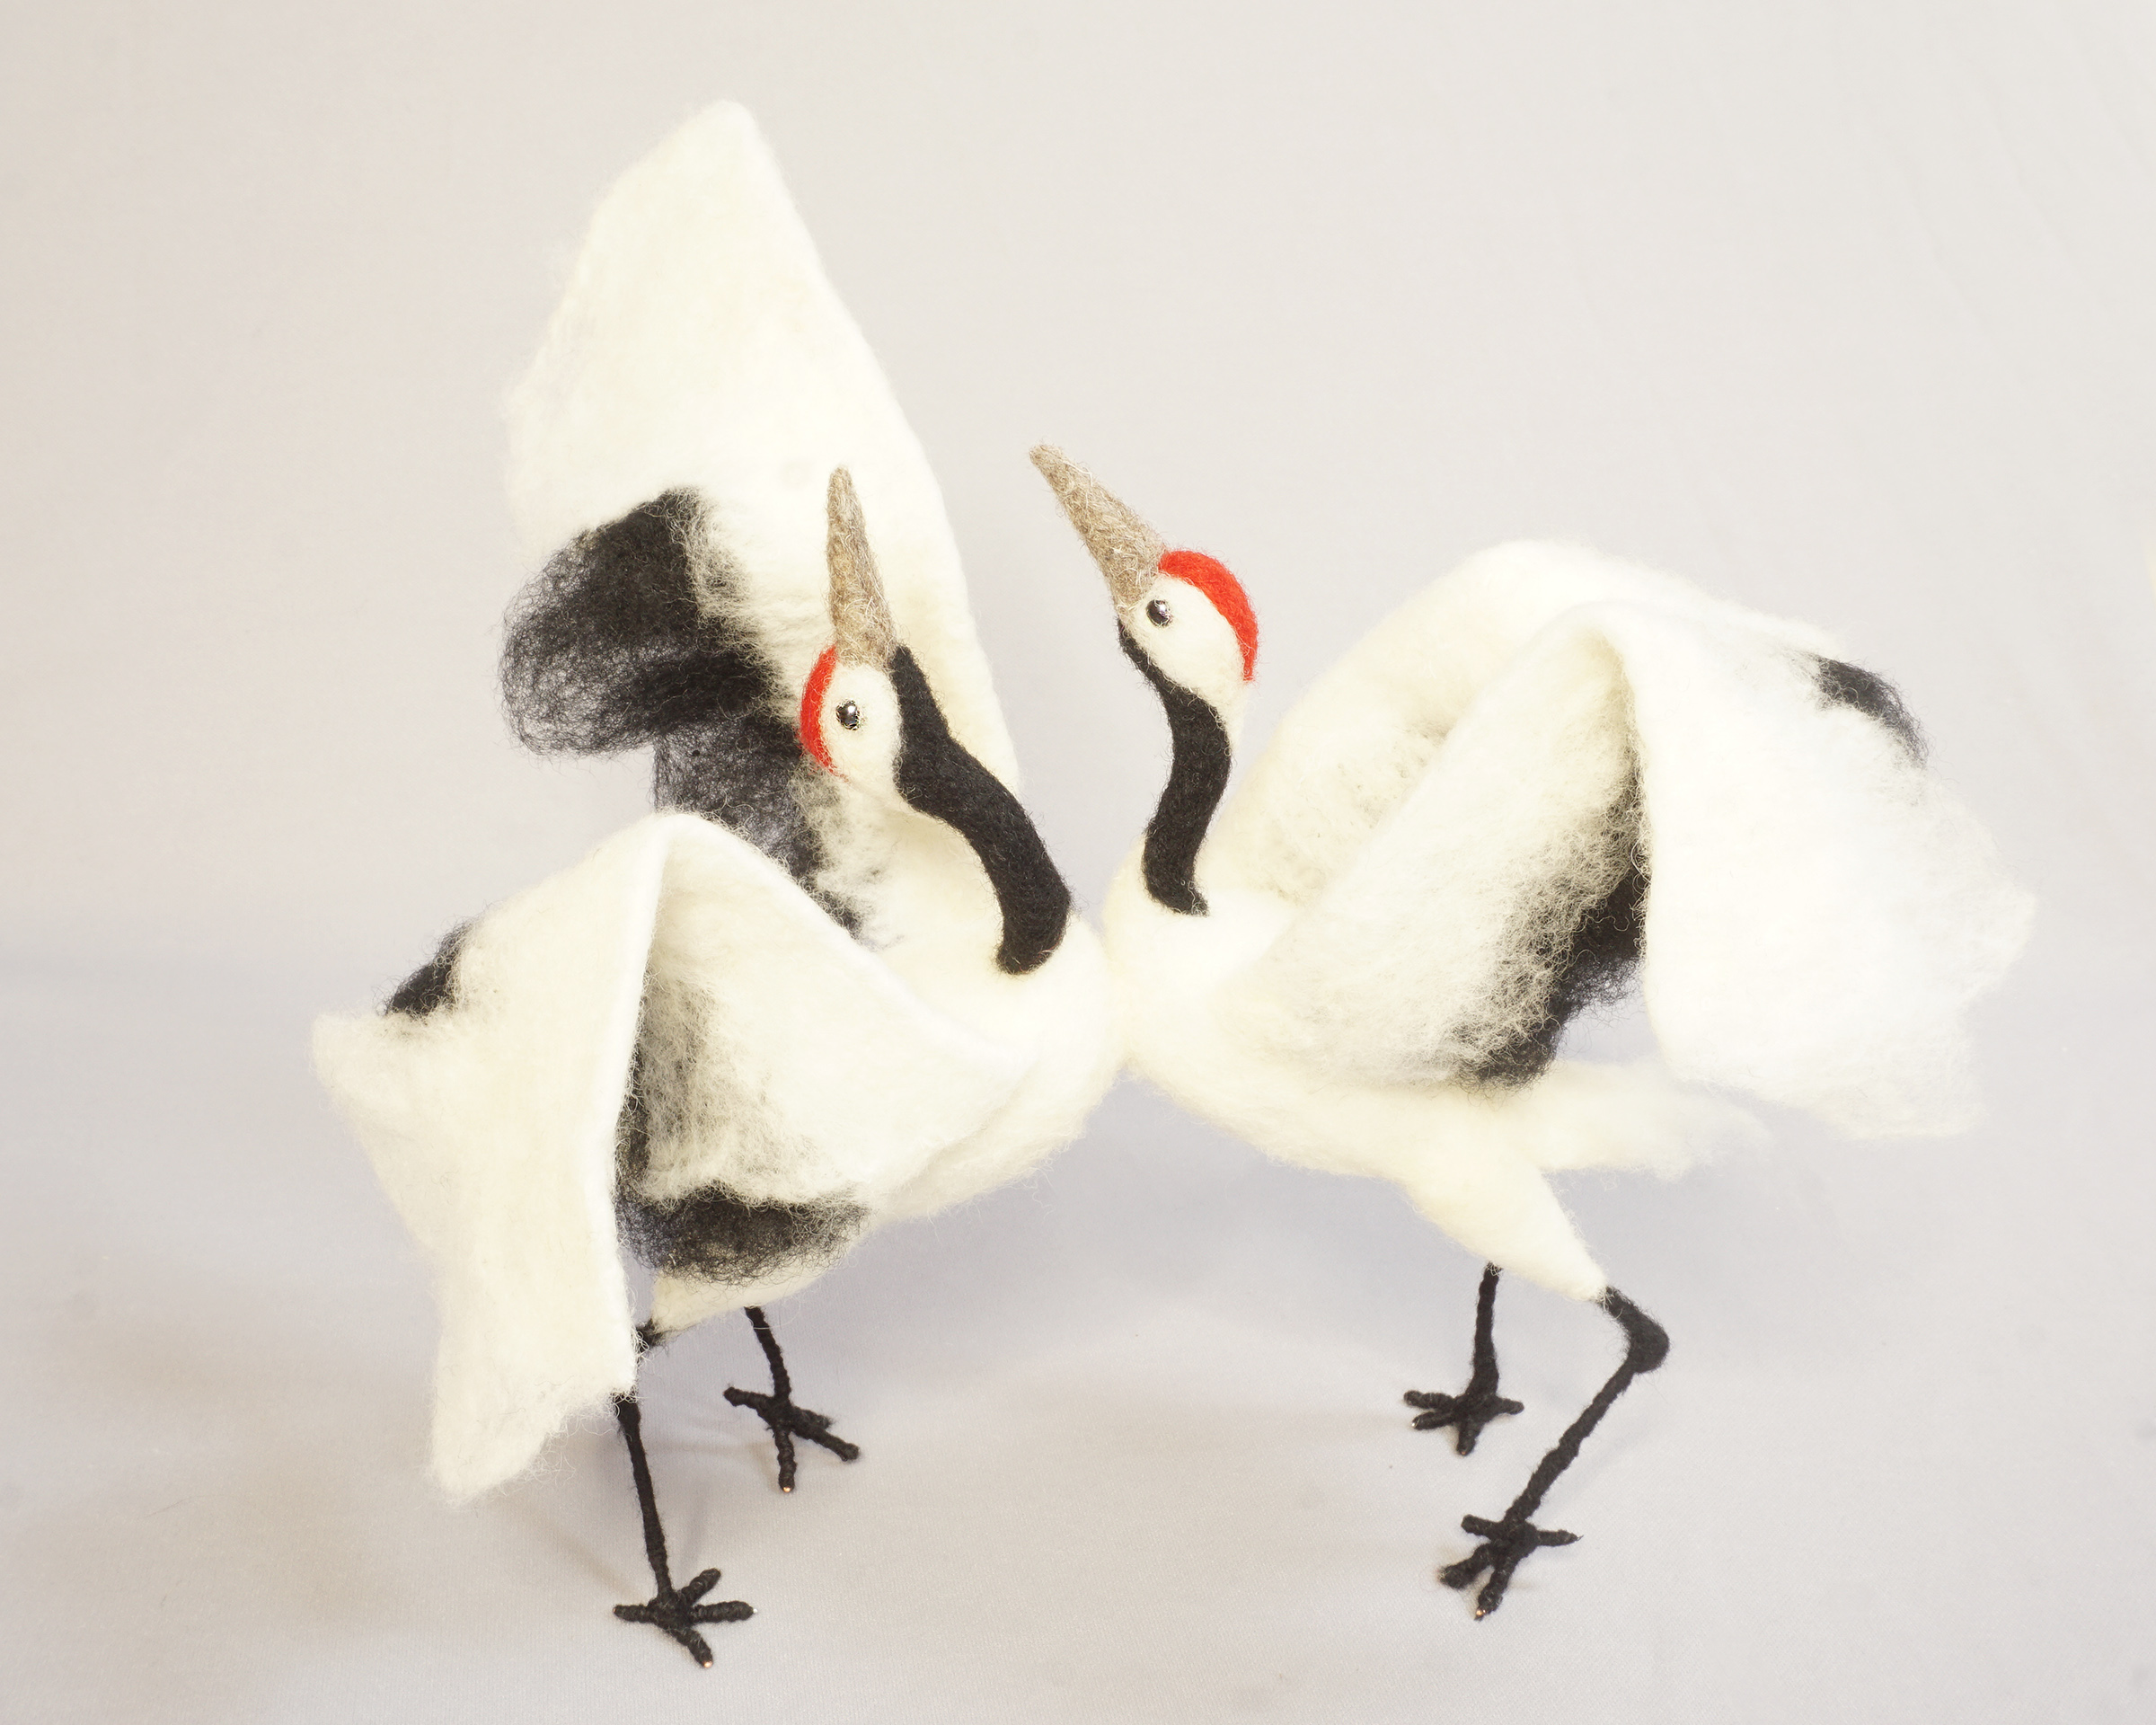 Anthropomorphic pair of dancing Japanese cranes. needle felted wool art doll figure sculpture